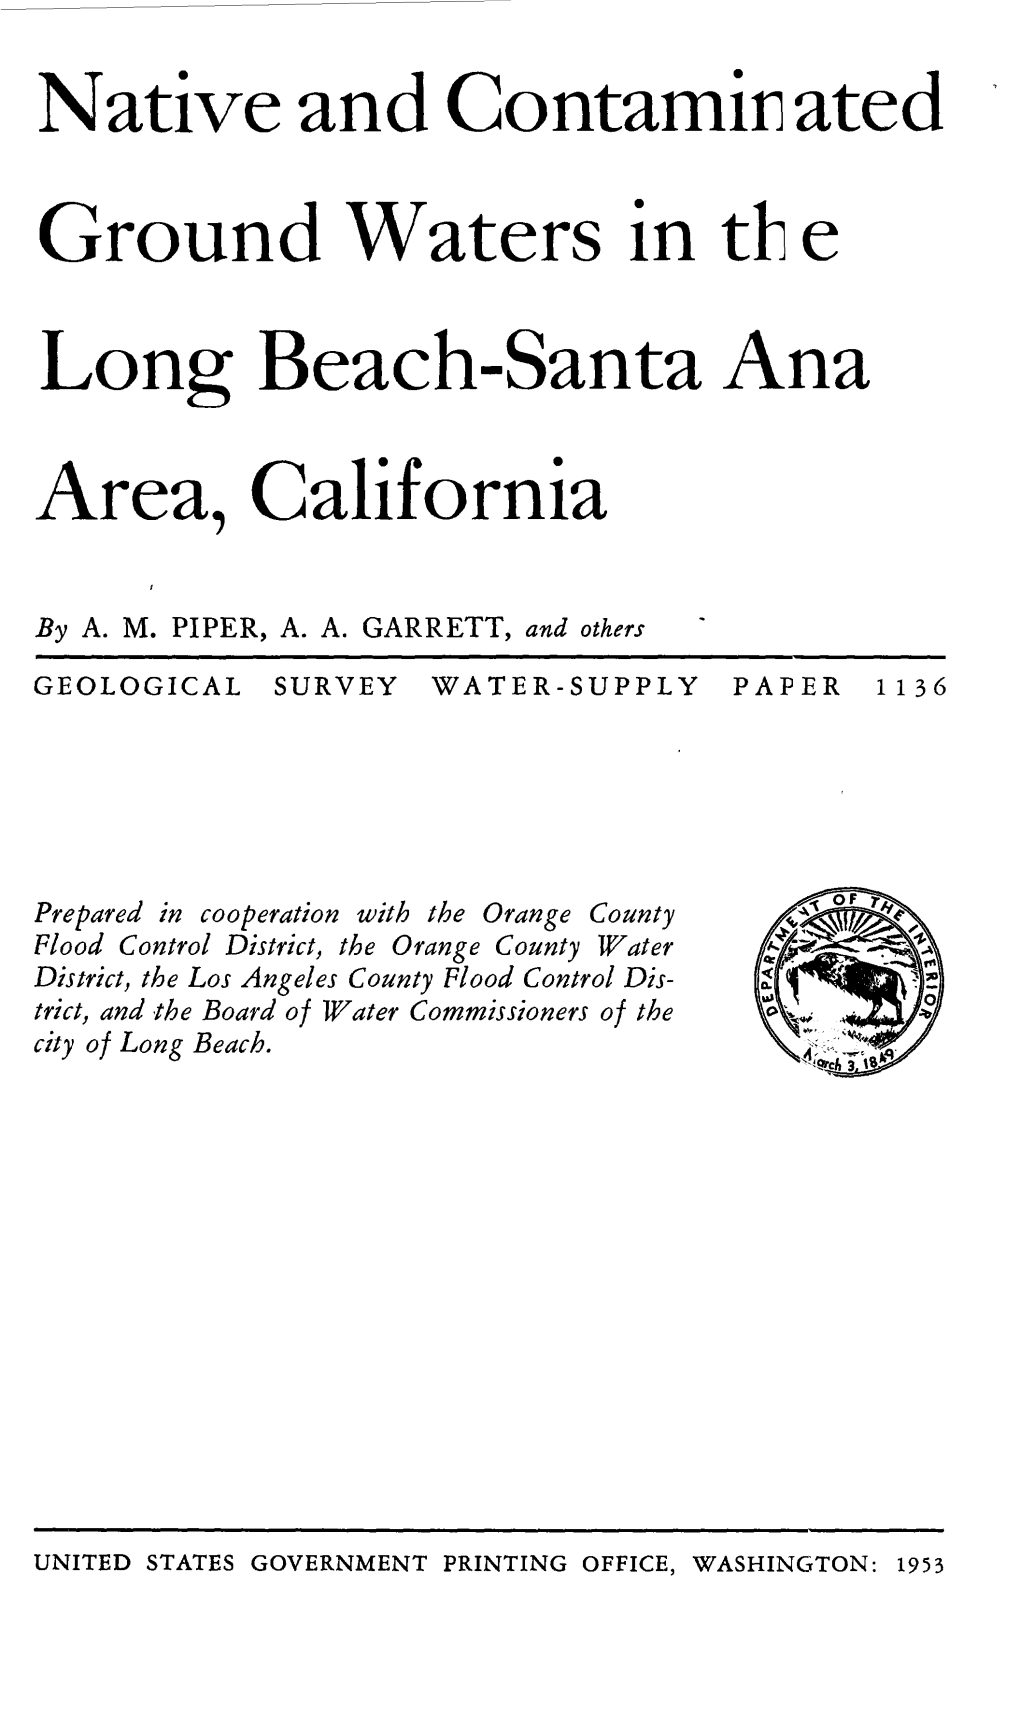 Native and Contaminated Ground Waters in Th E Long Beach-Santa Ana Area, California